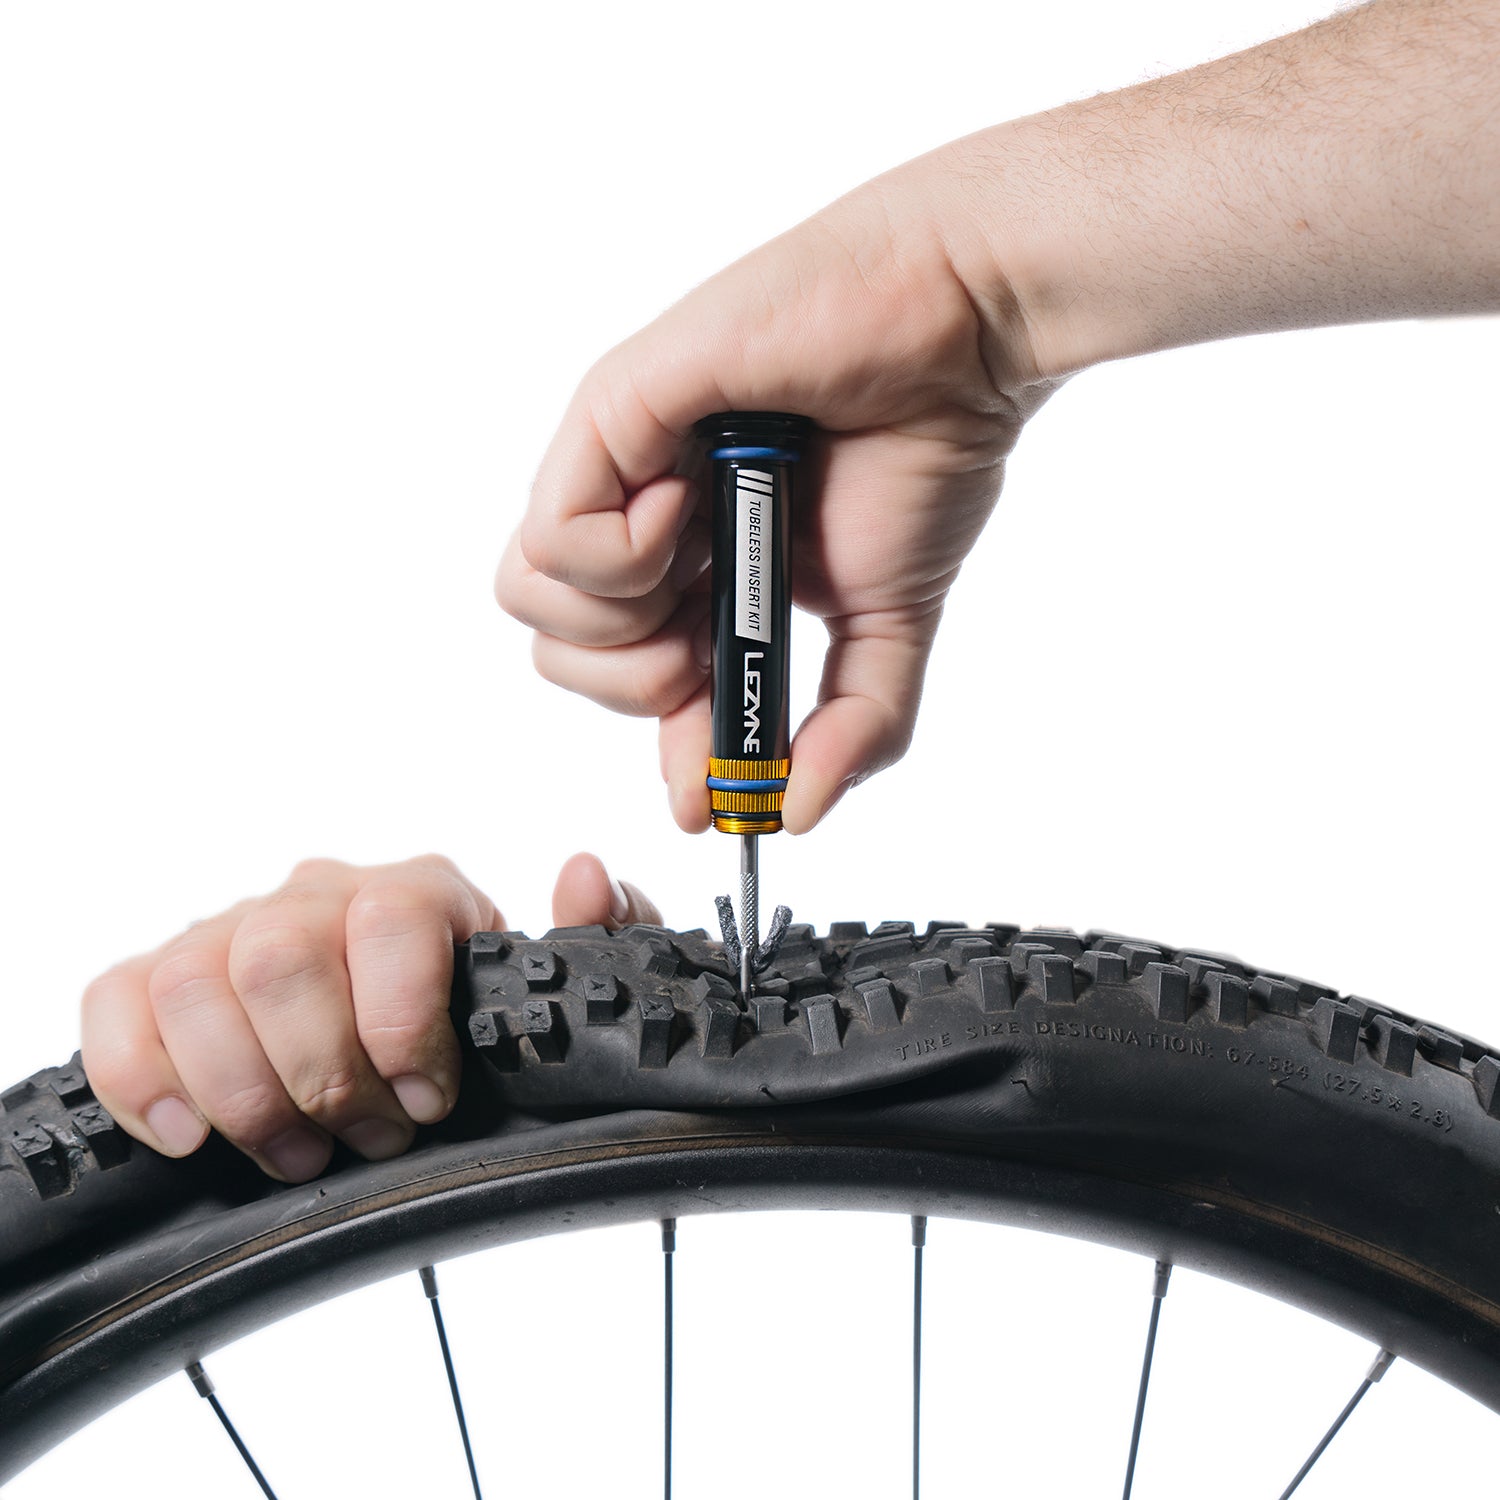 Tubeless Bike Tire Repair Kit for Road and Mountain Bikes